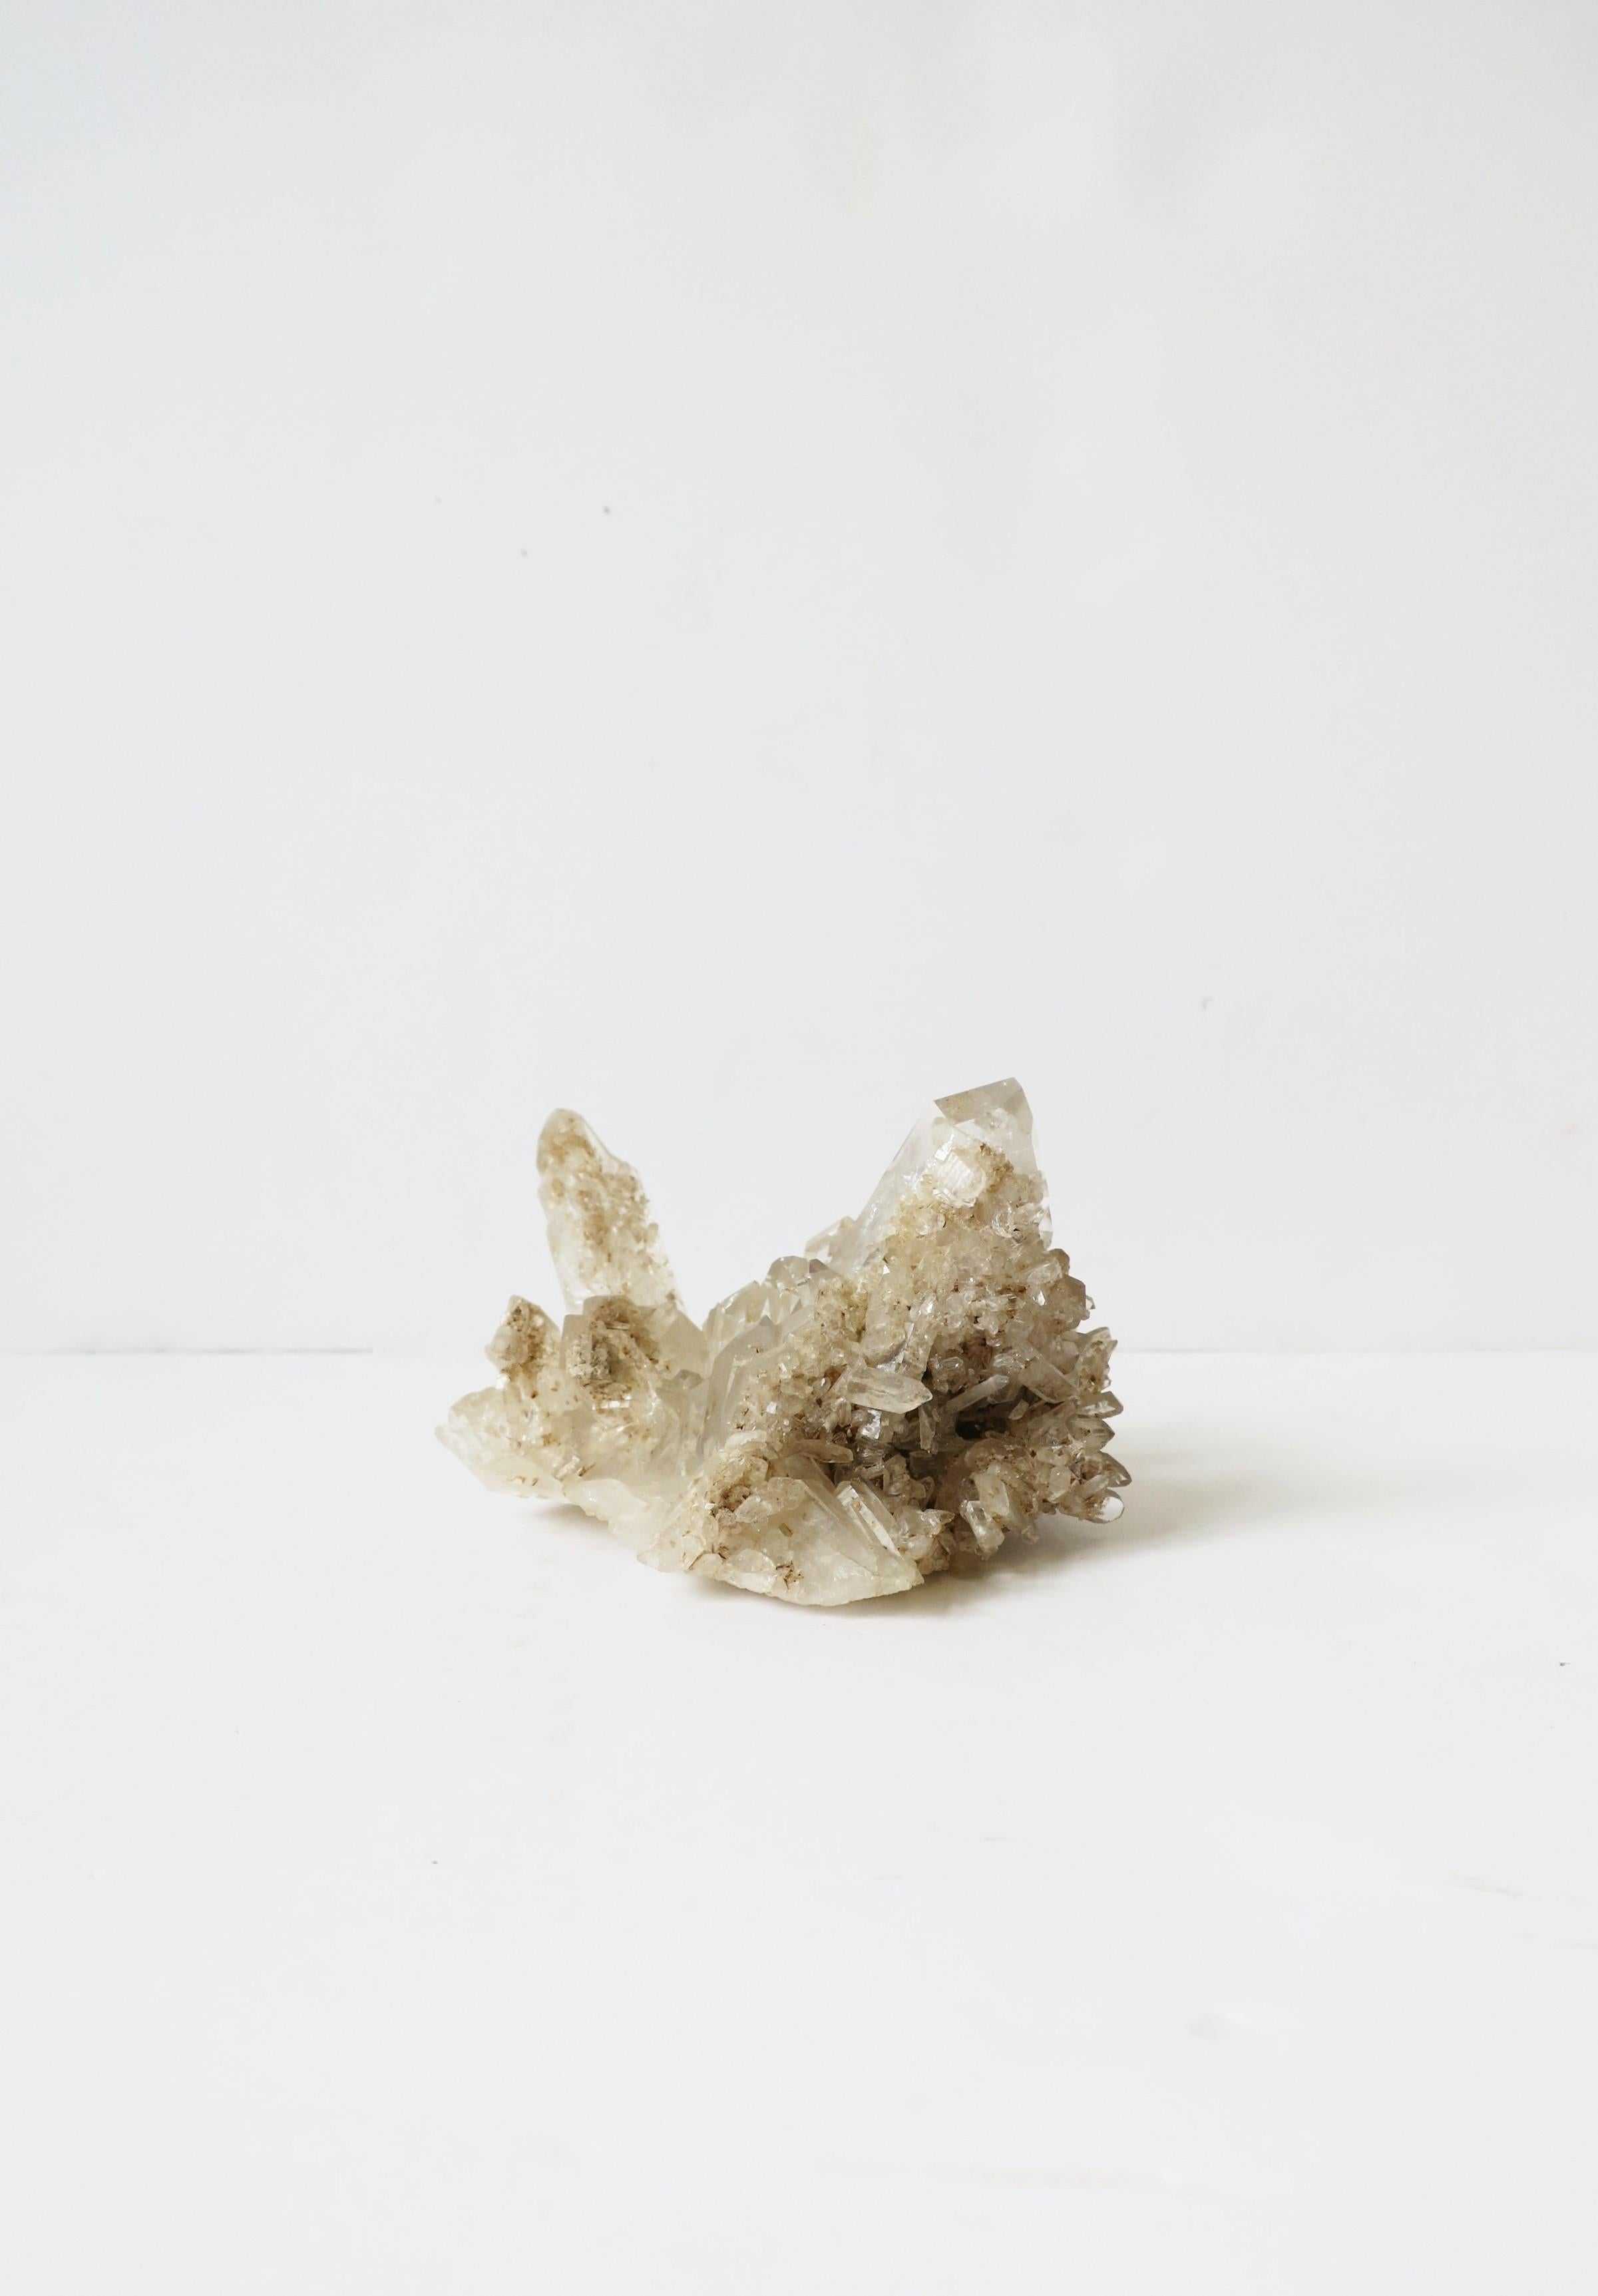 Quartz Natural Rock Crystal Specimen Piece For Sale